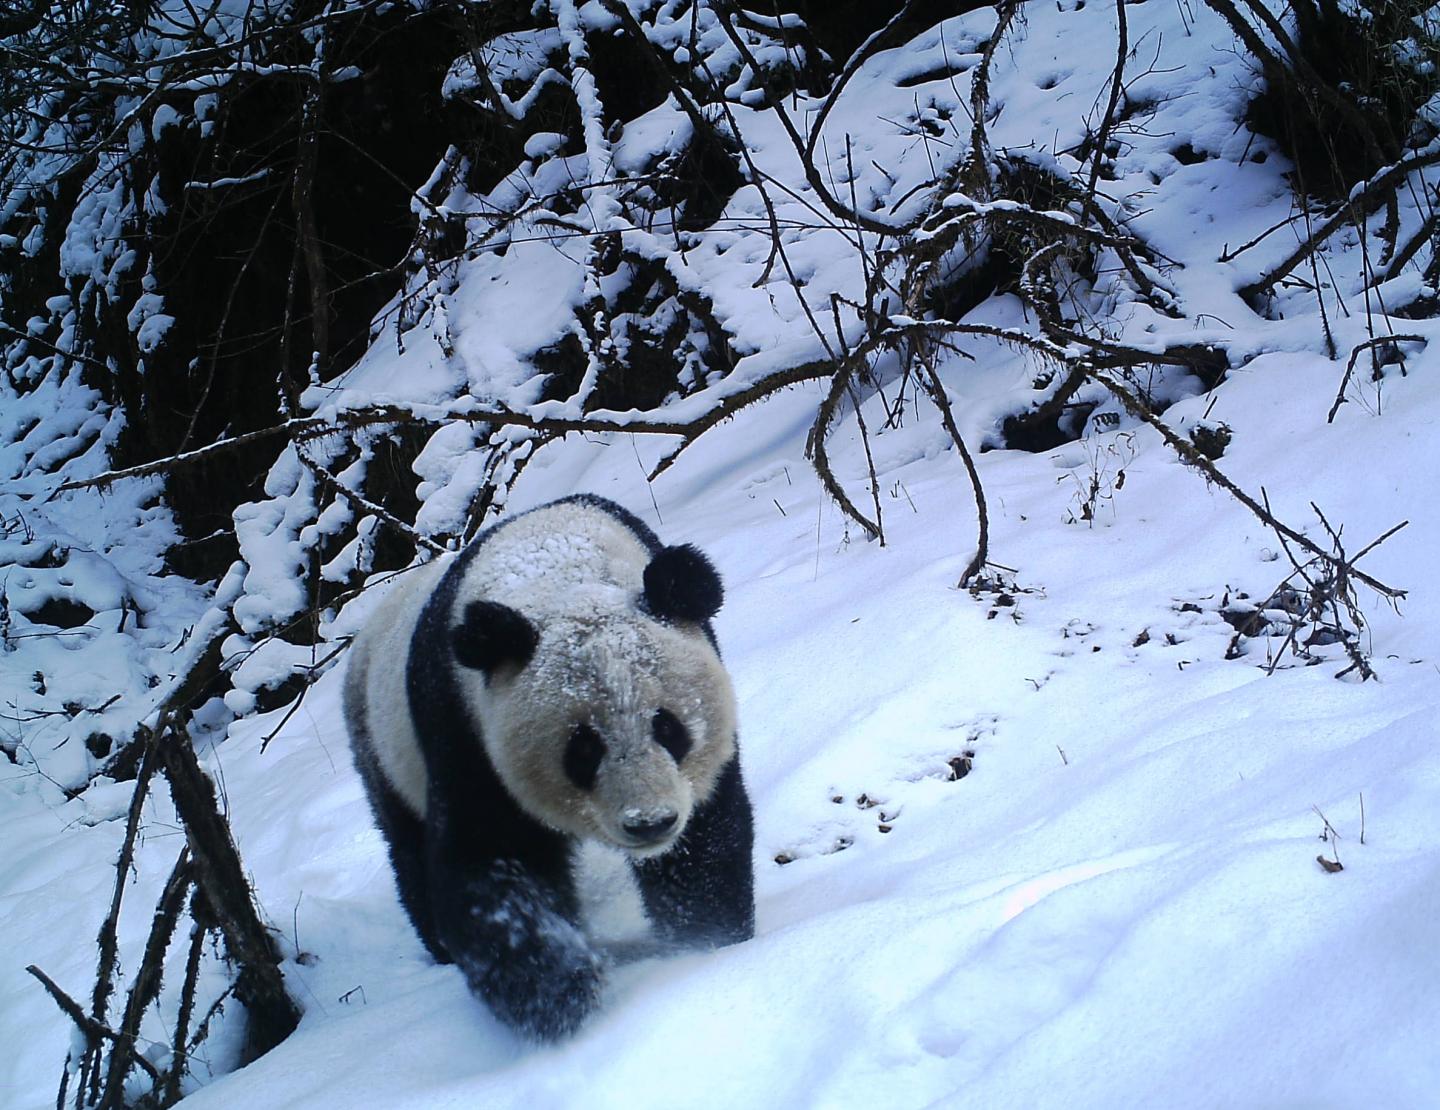 Panda through the Snow